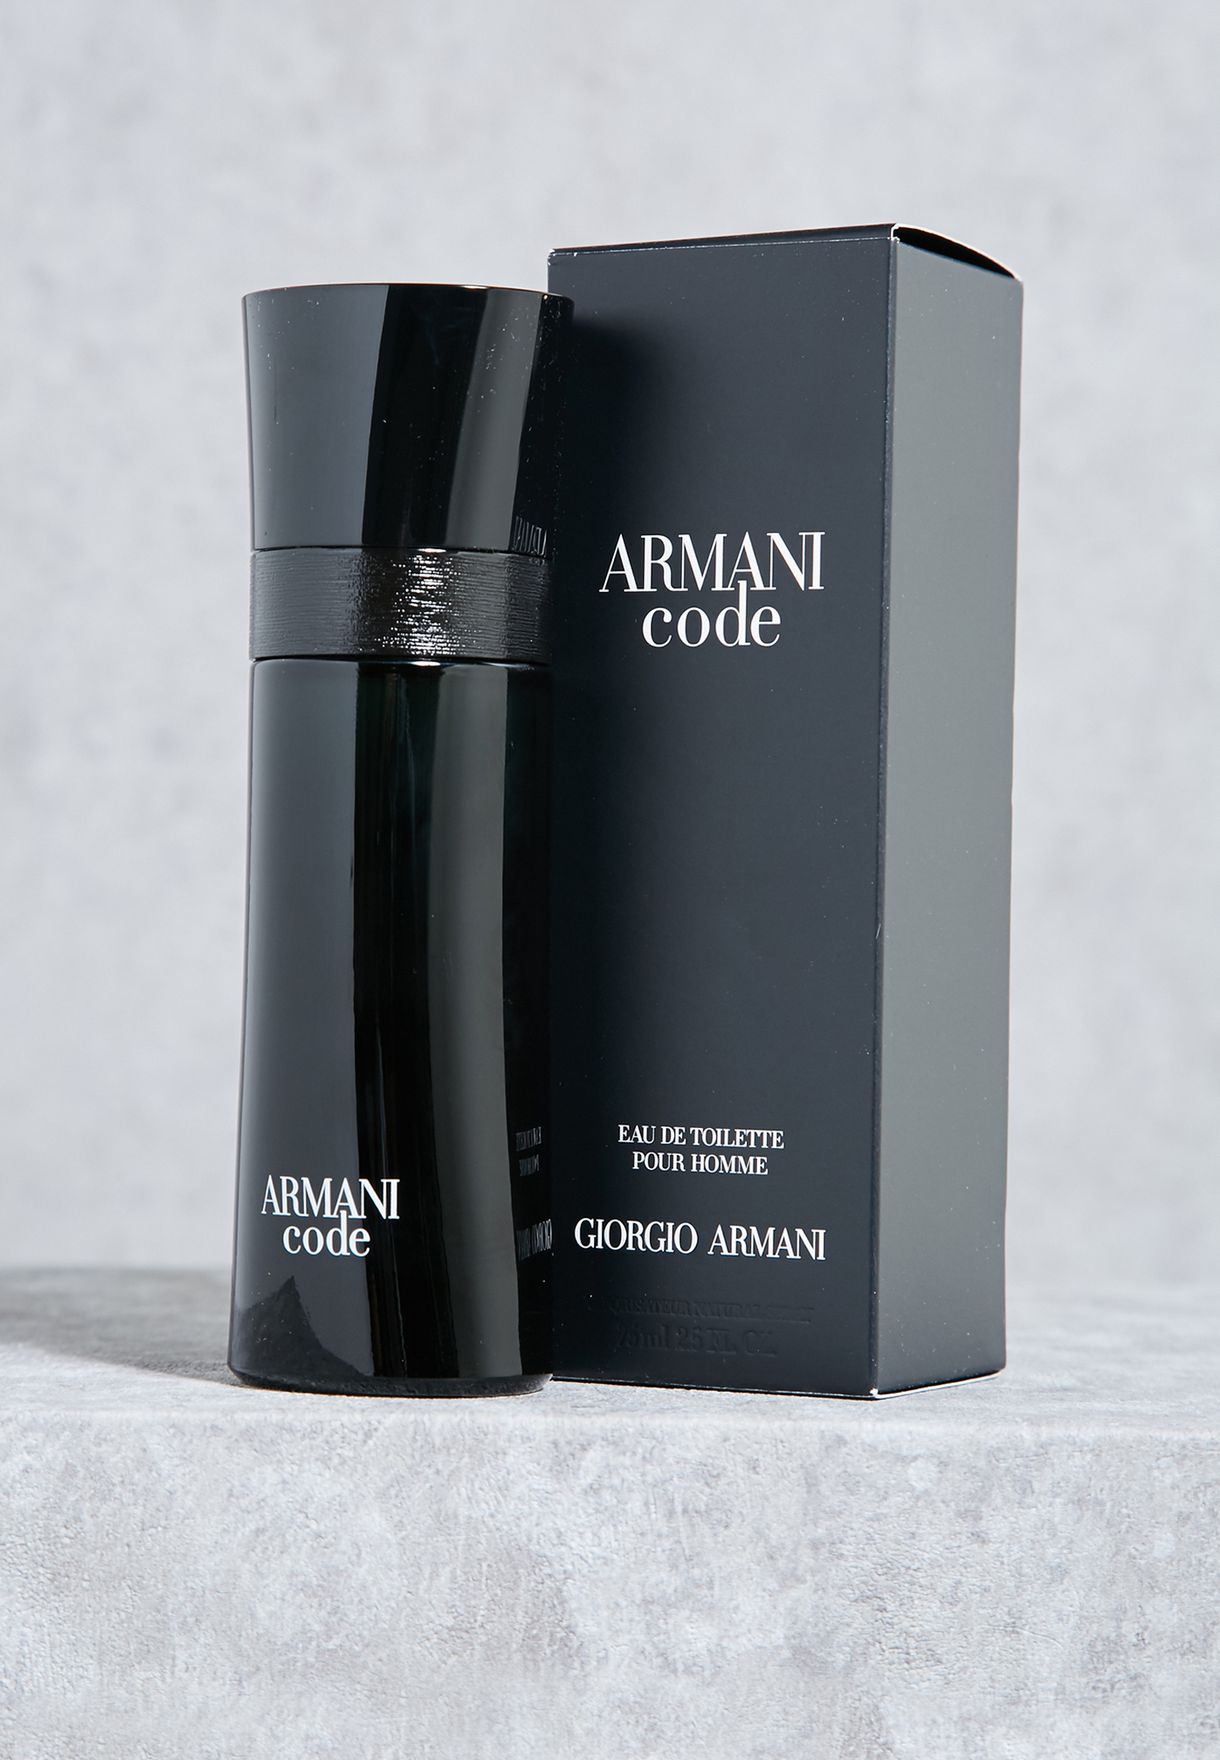 Armani code pour homme. Armani code мужской 125ml. Giorgio Armani Armani code. Armani Black code мужской. Giorgio Armani Black code for men 125ml.